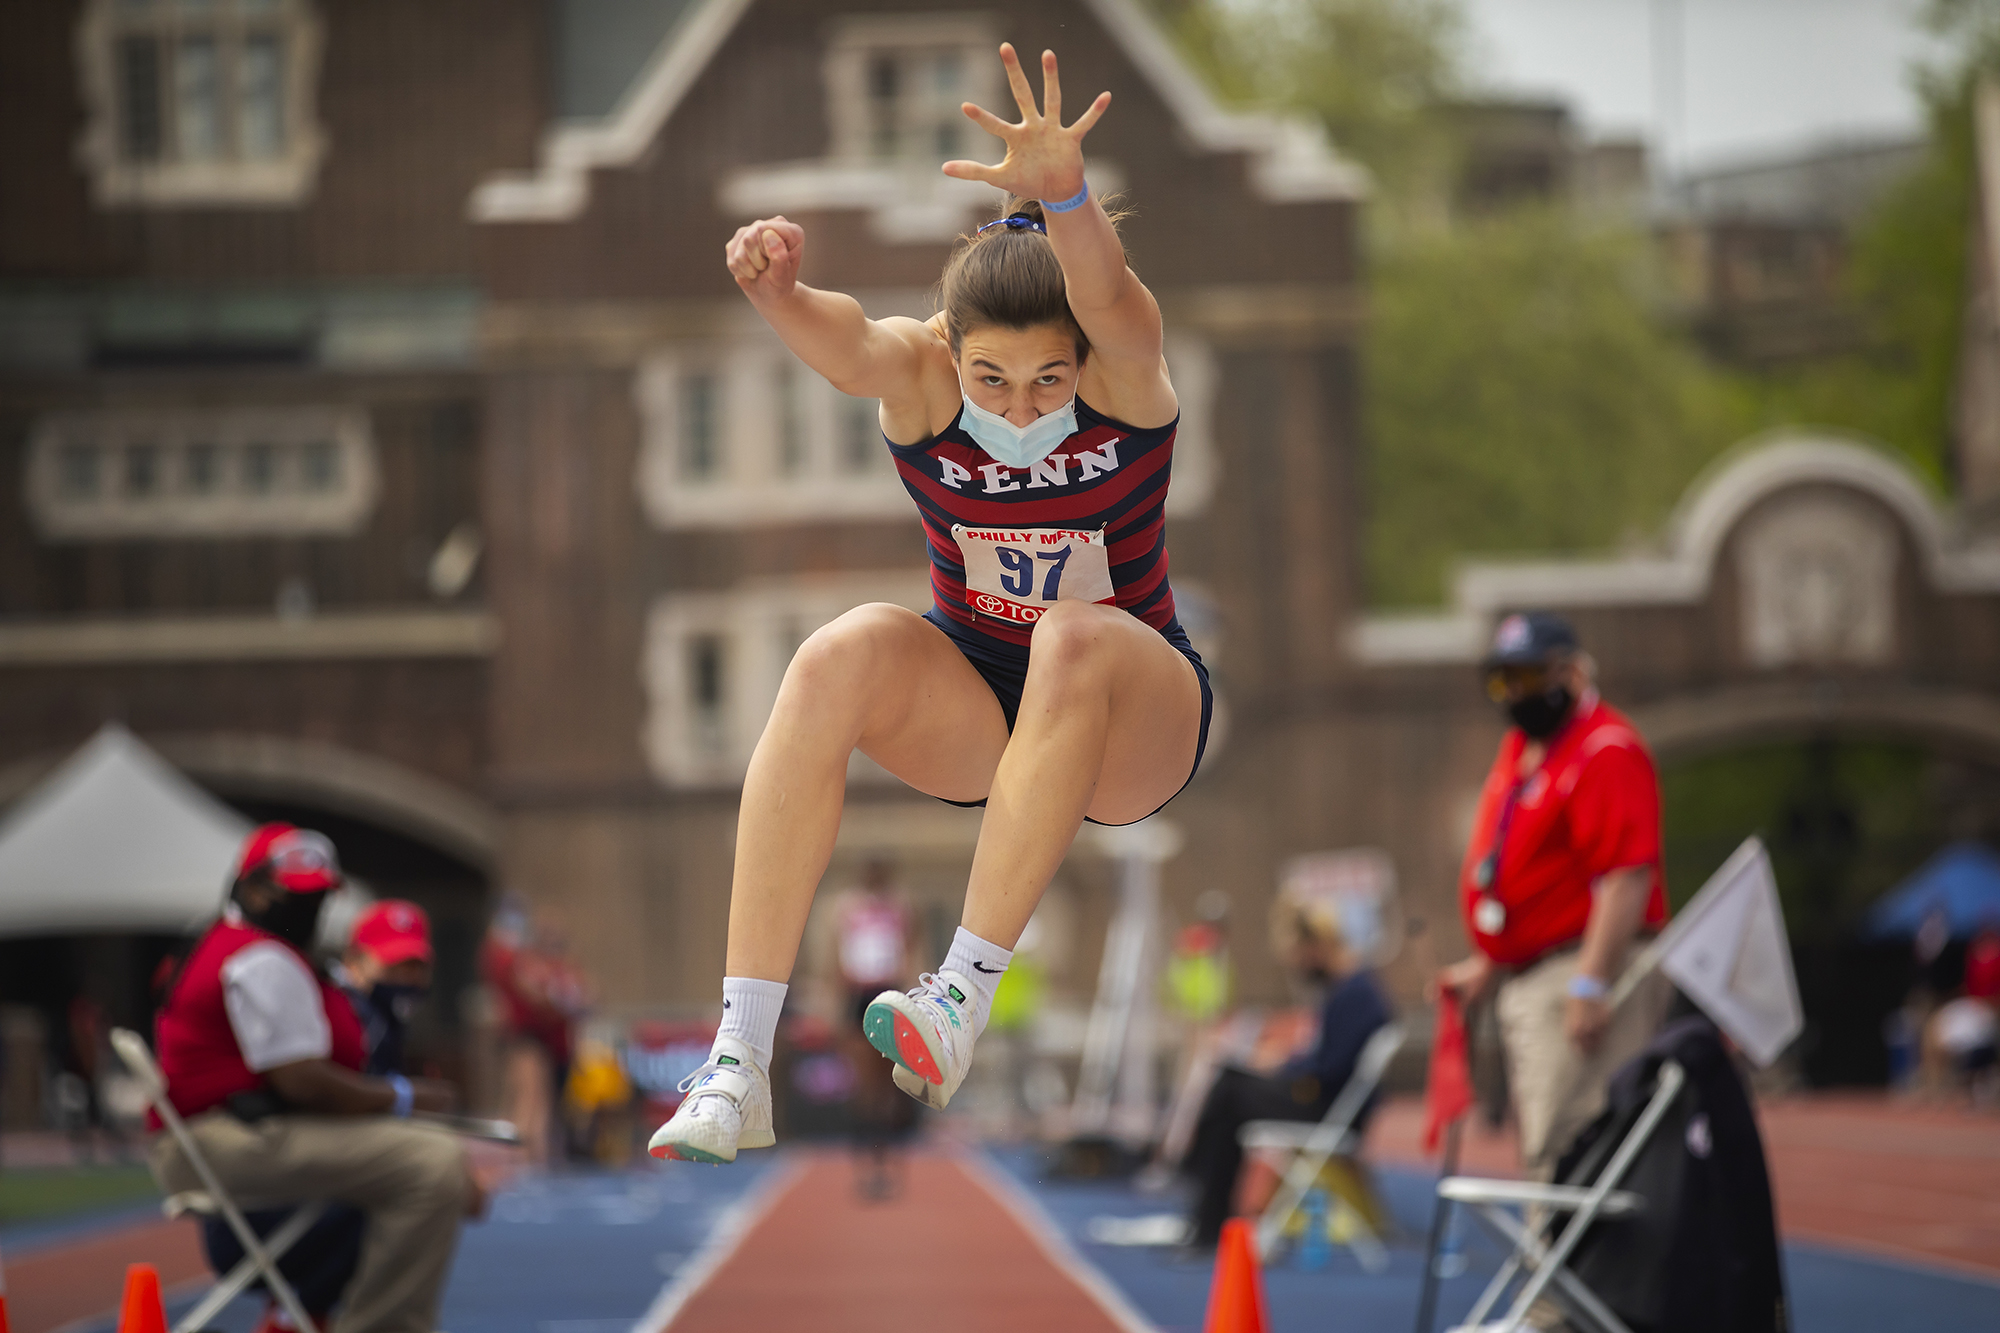 A Penn athlete performs a jump at Franklin Field during the Philadelphia Metropolitan Collegiate Invitational on April 24.